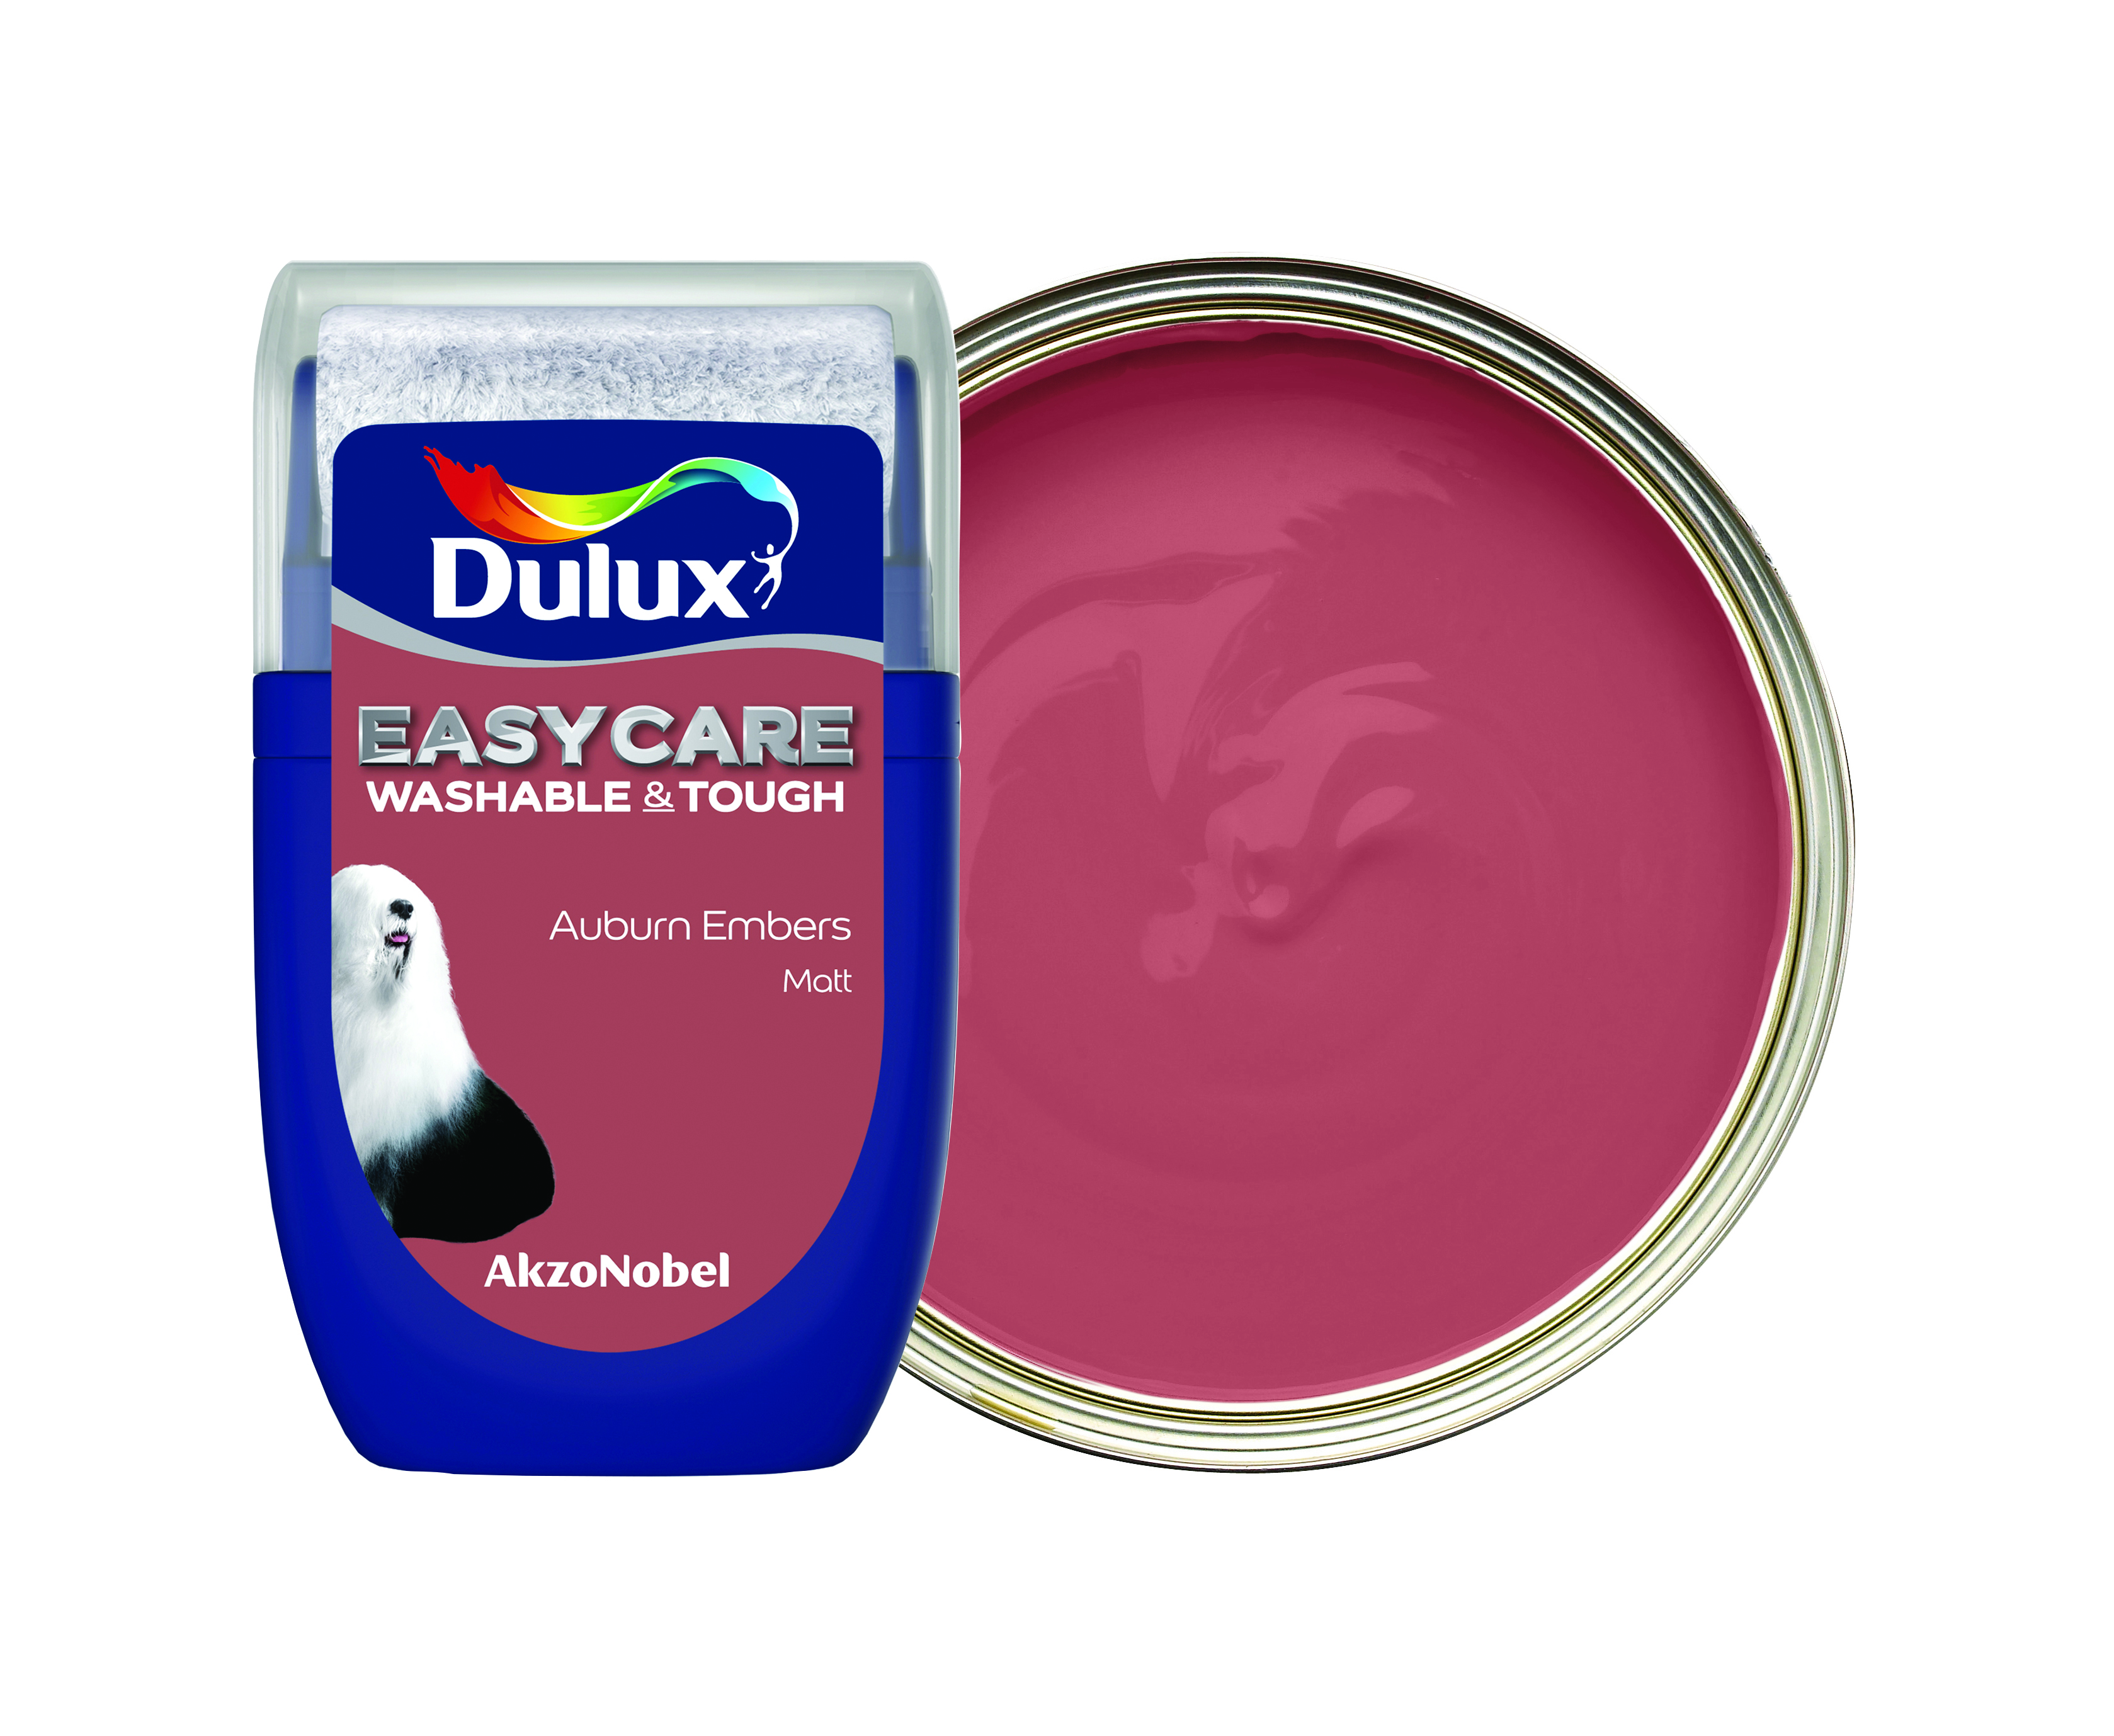 Image of Dulux Easycare Washable & Tough Paint - Auburn Embers Tester Pot - 30ml